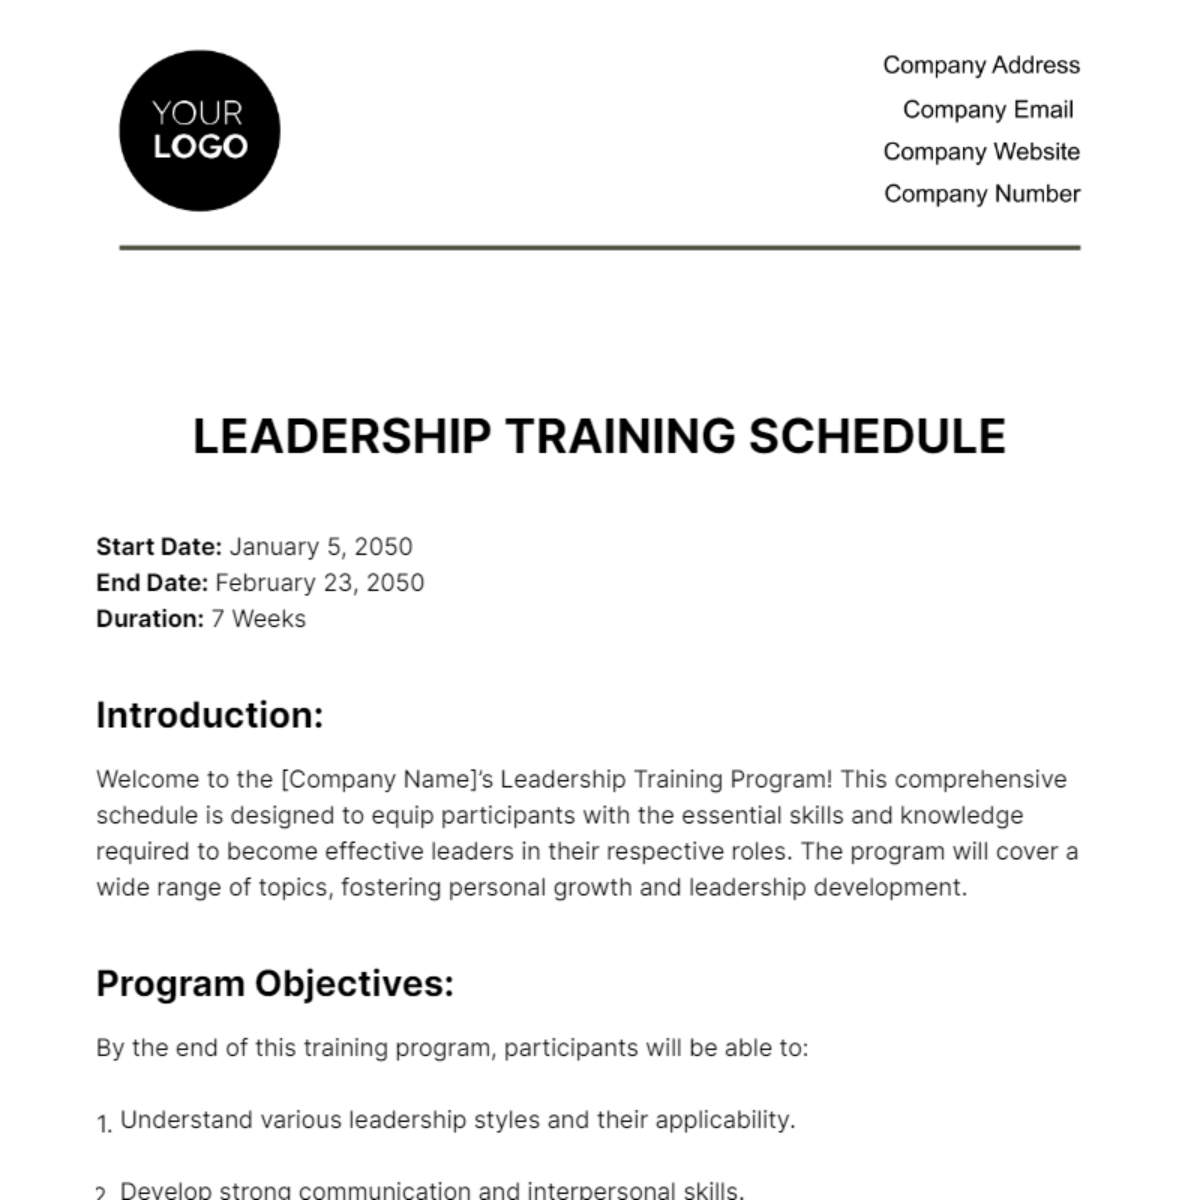 leadership-training-schedule-hr-template-edit-online-download